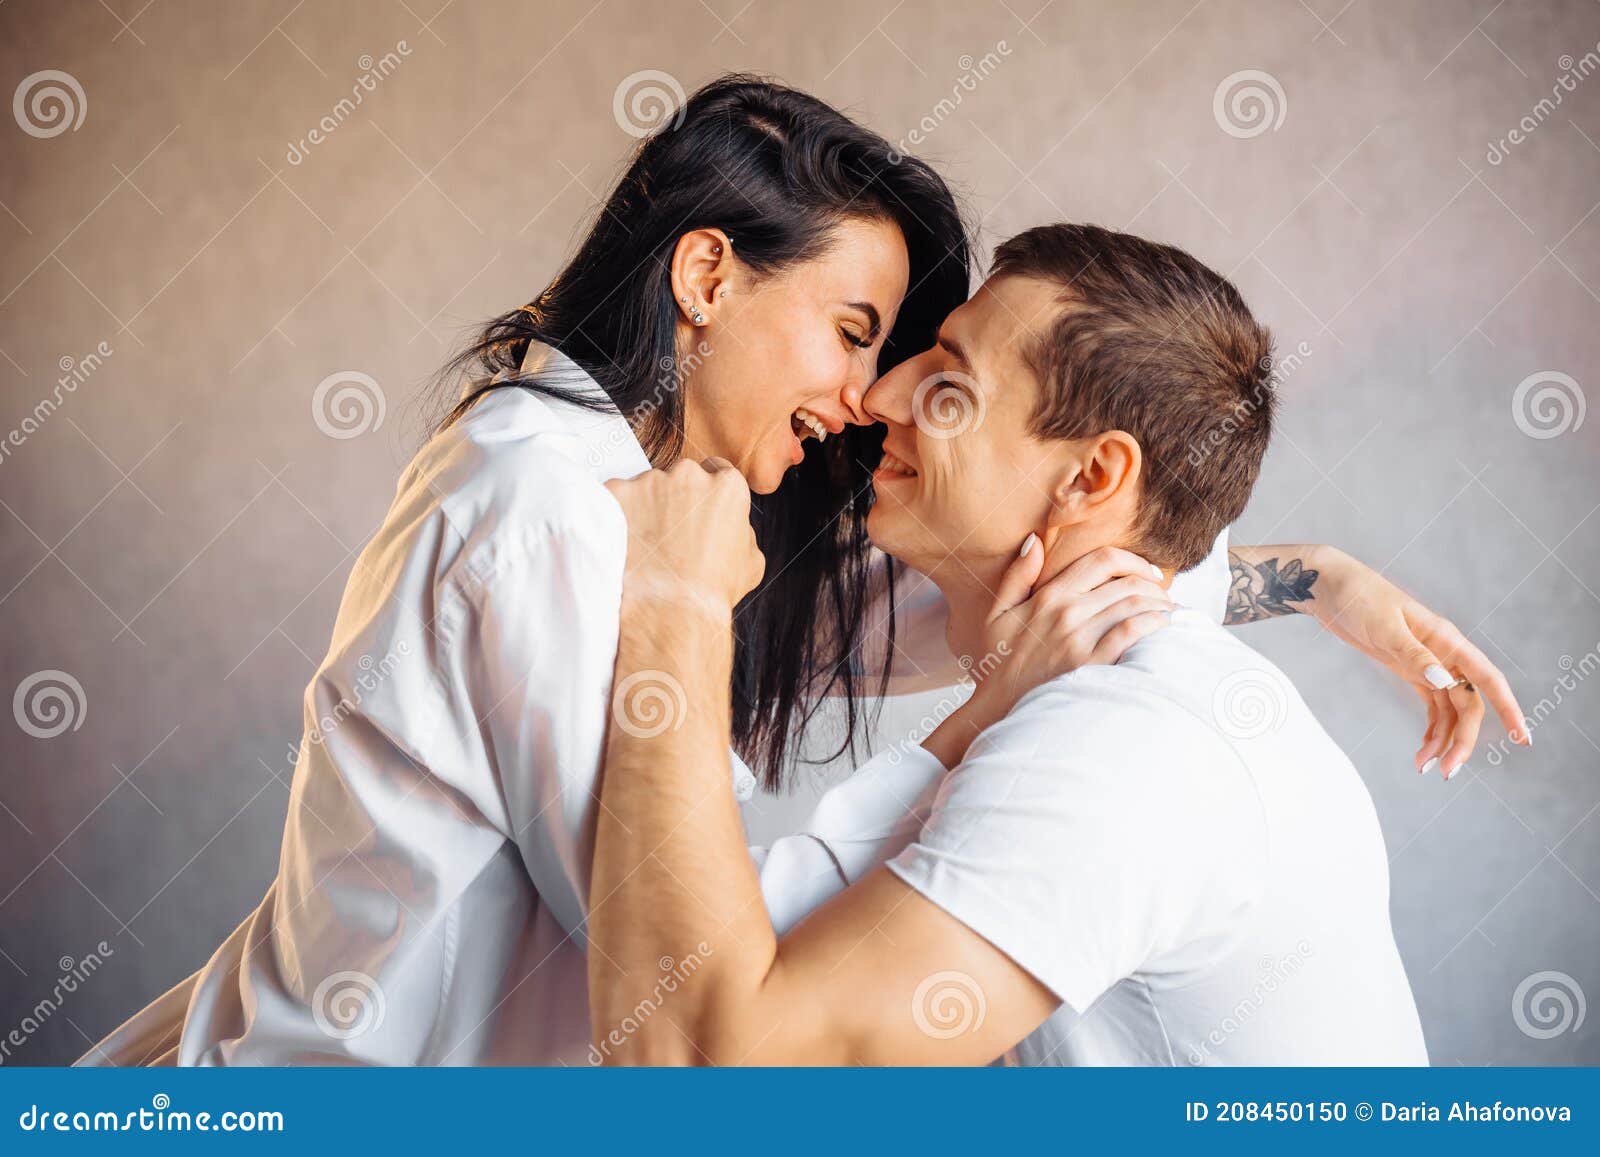 Beautiful Passionate Couple Having Sex on the photo